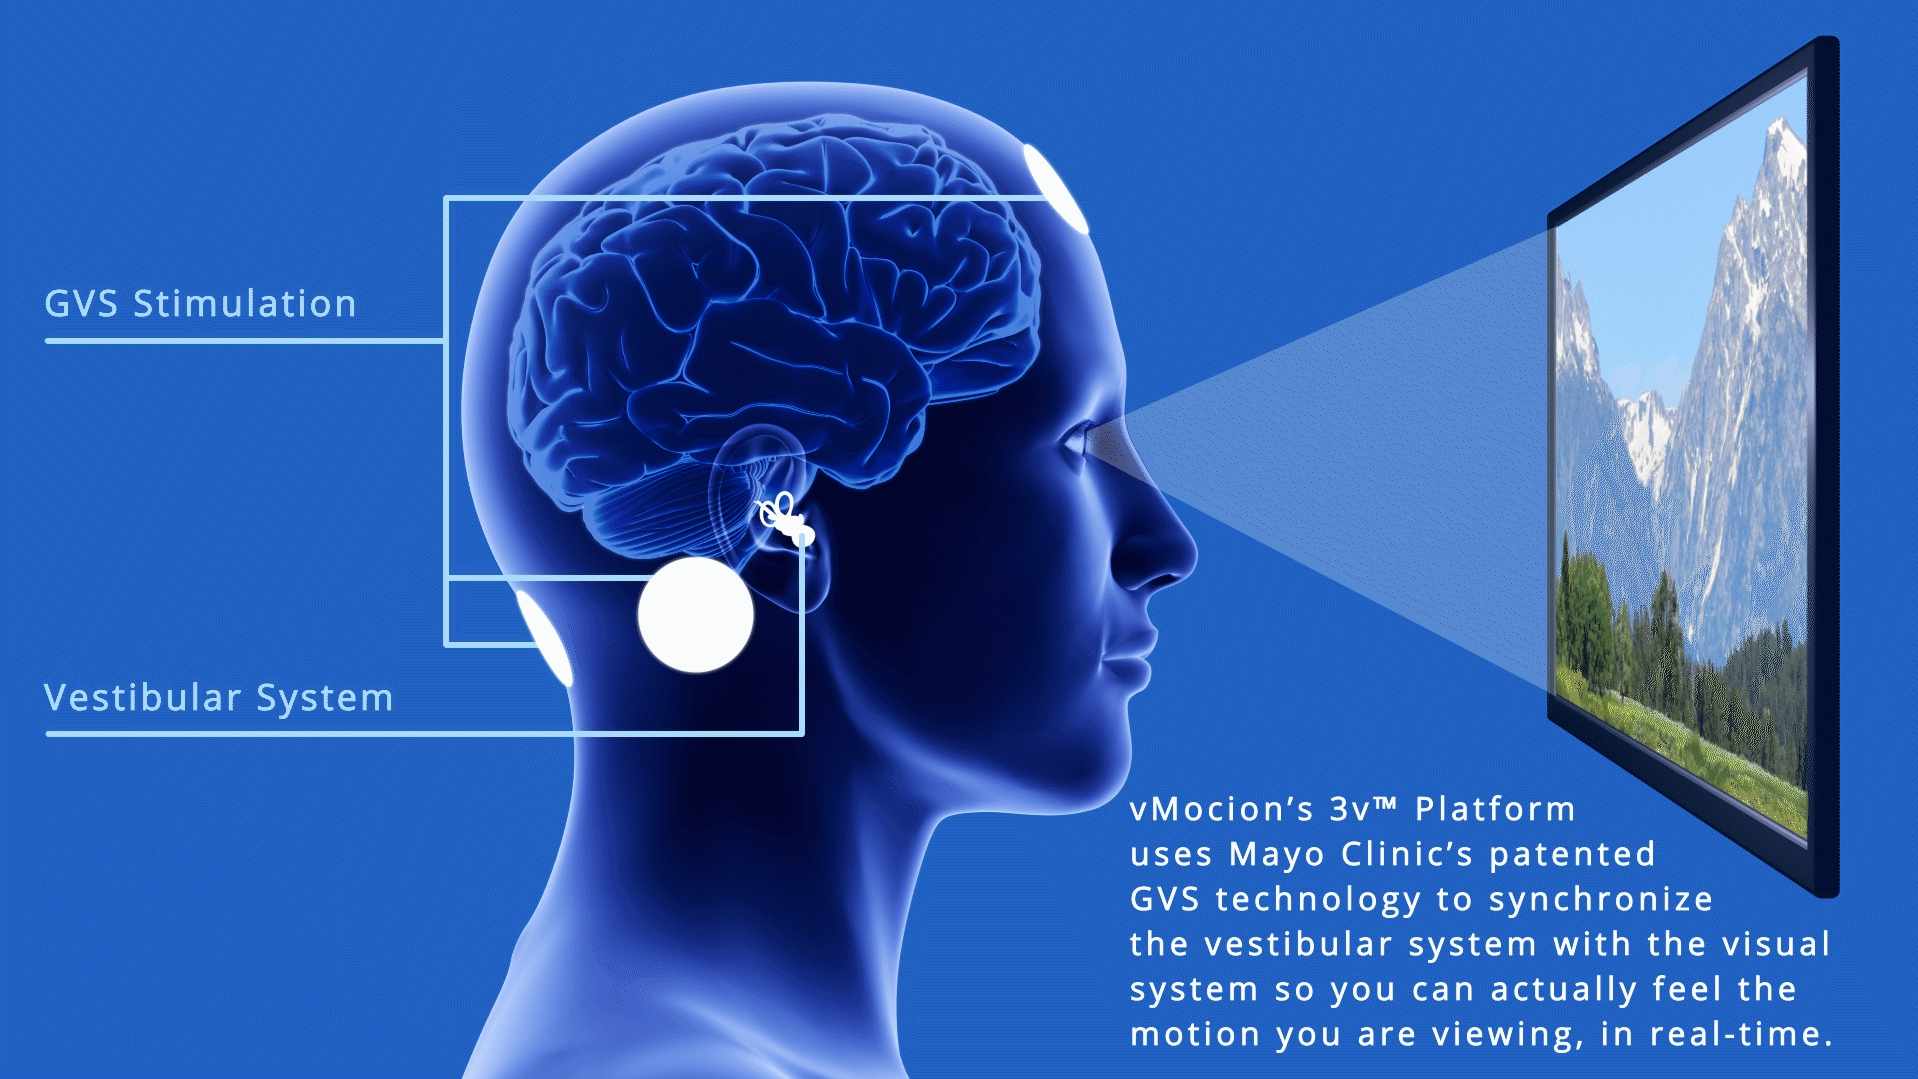 Illustration of vMocion 3v Platform attached to human brain